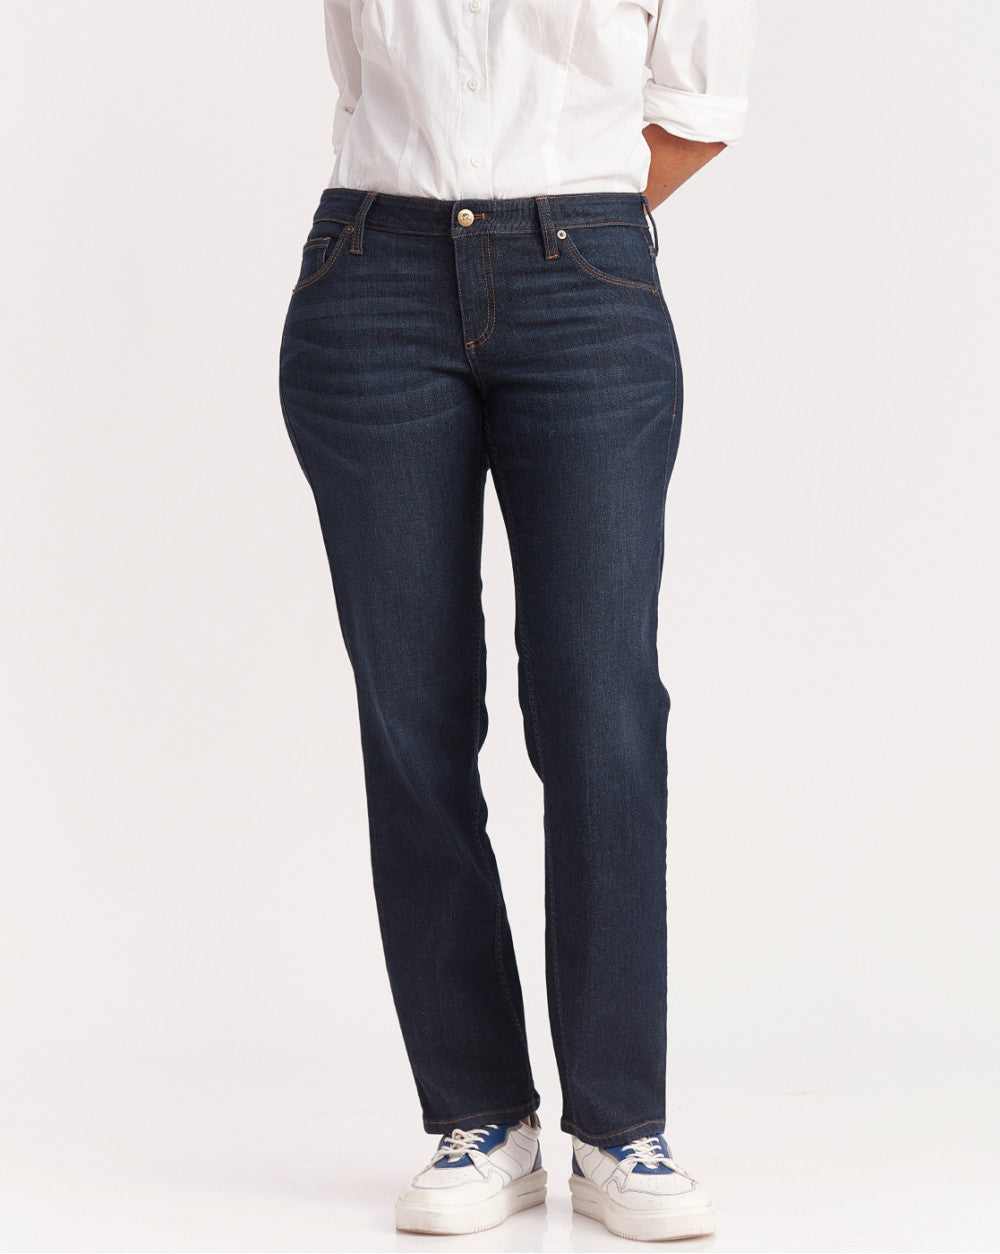 Straight Fit Waist Jeans - Prime Blue